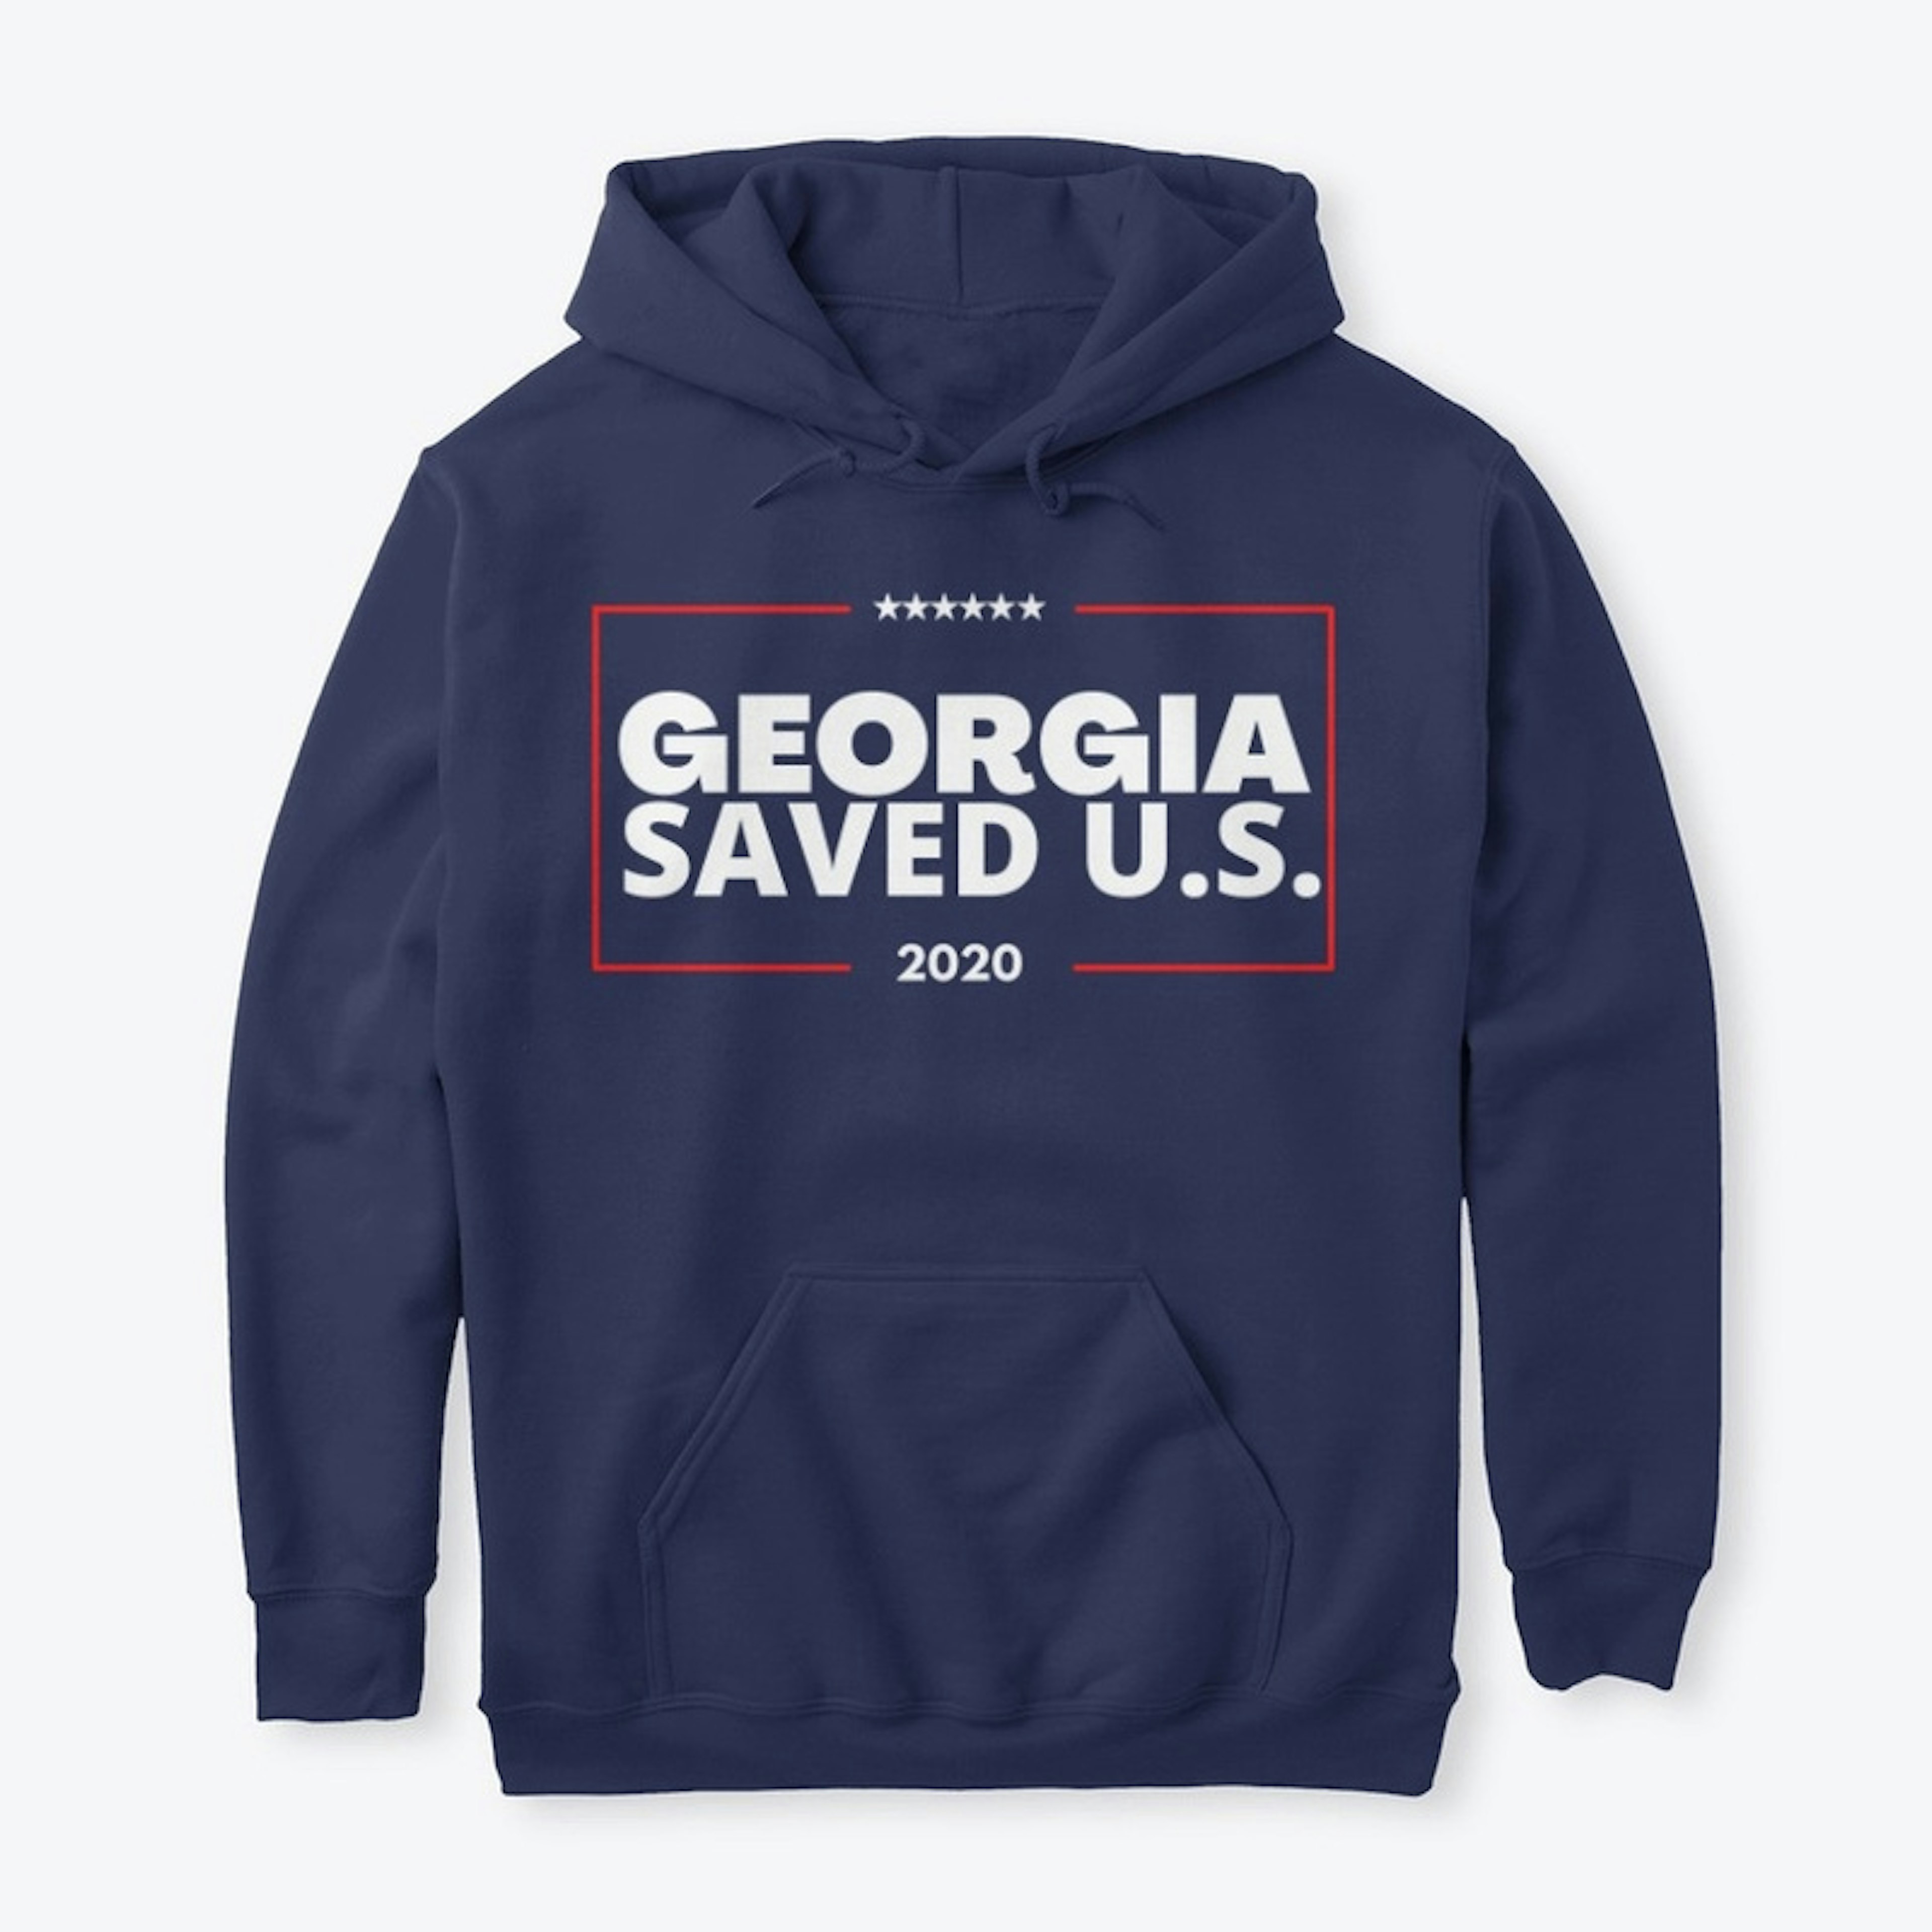 Georgia Saved U.S. (Blue & Black)